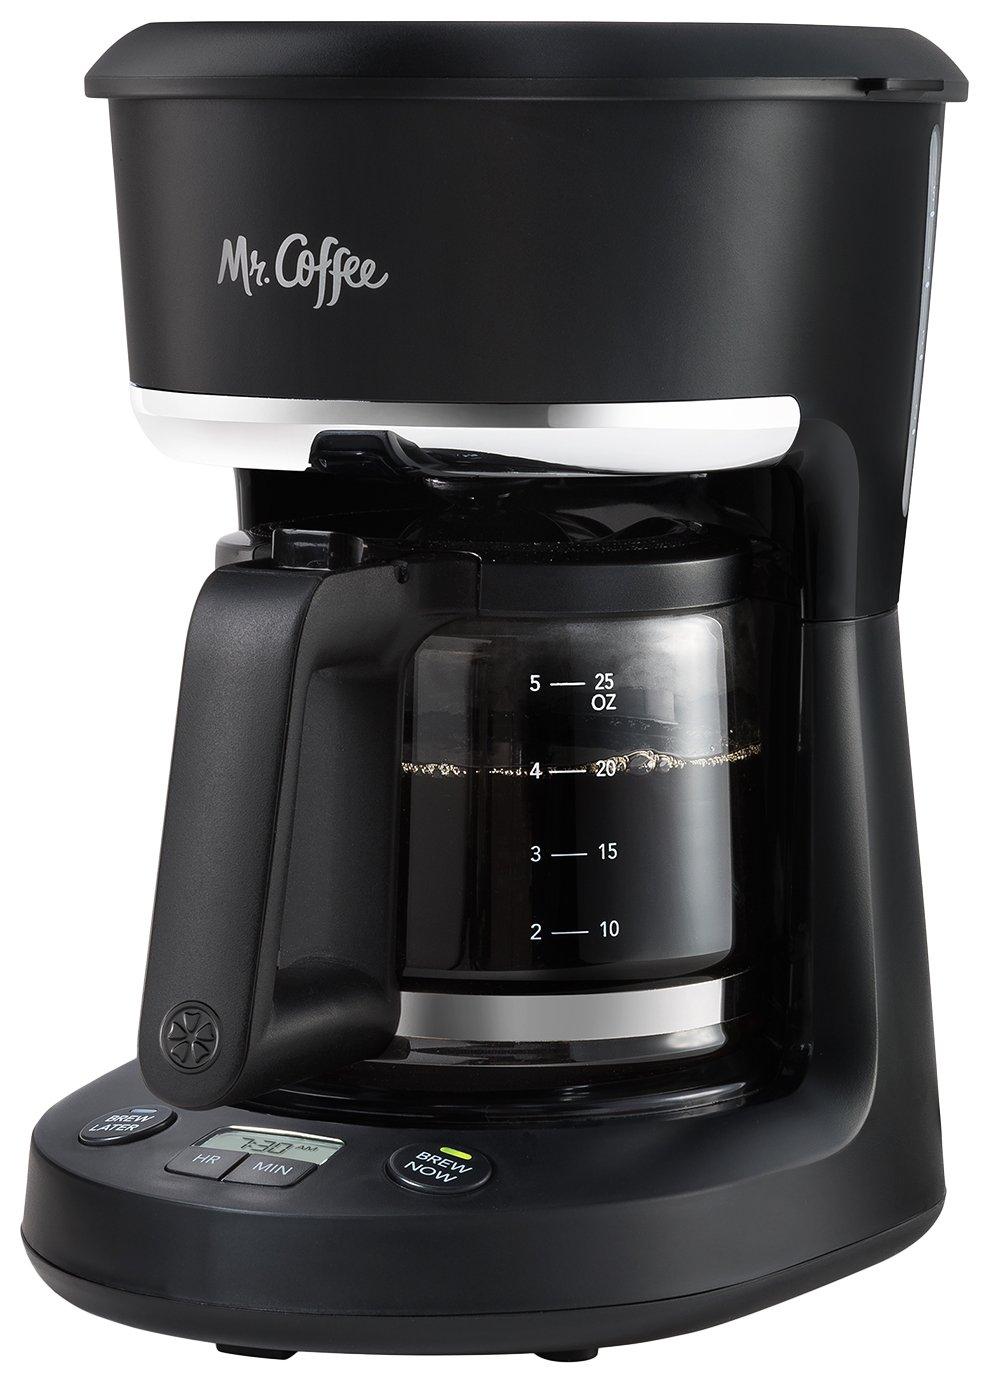 Mr. Coffee 5-Cup Coffee Maker